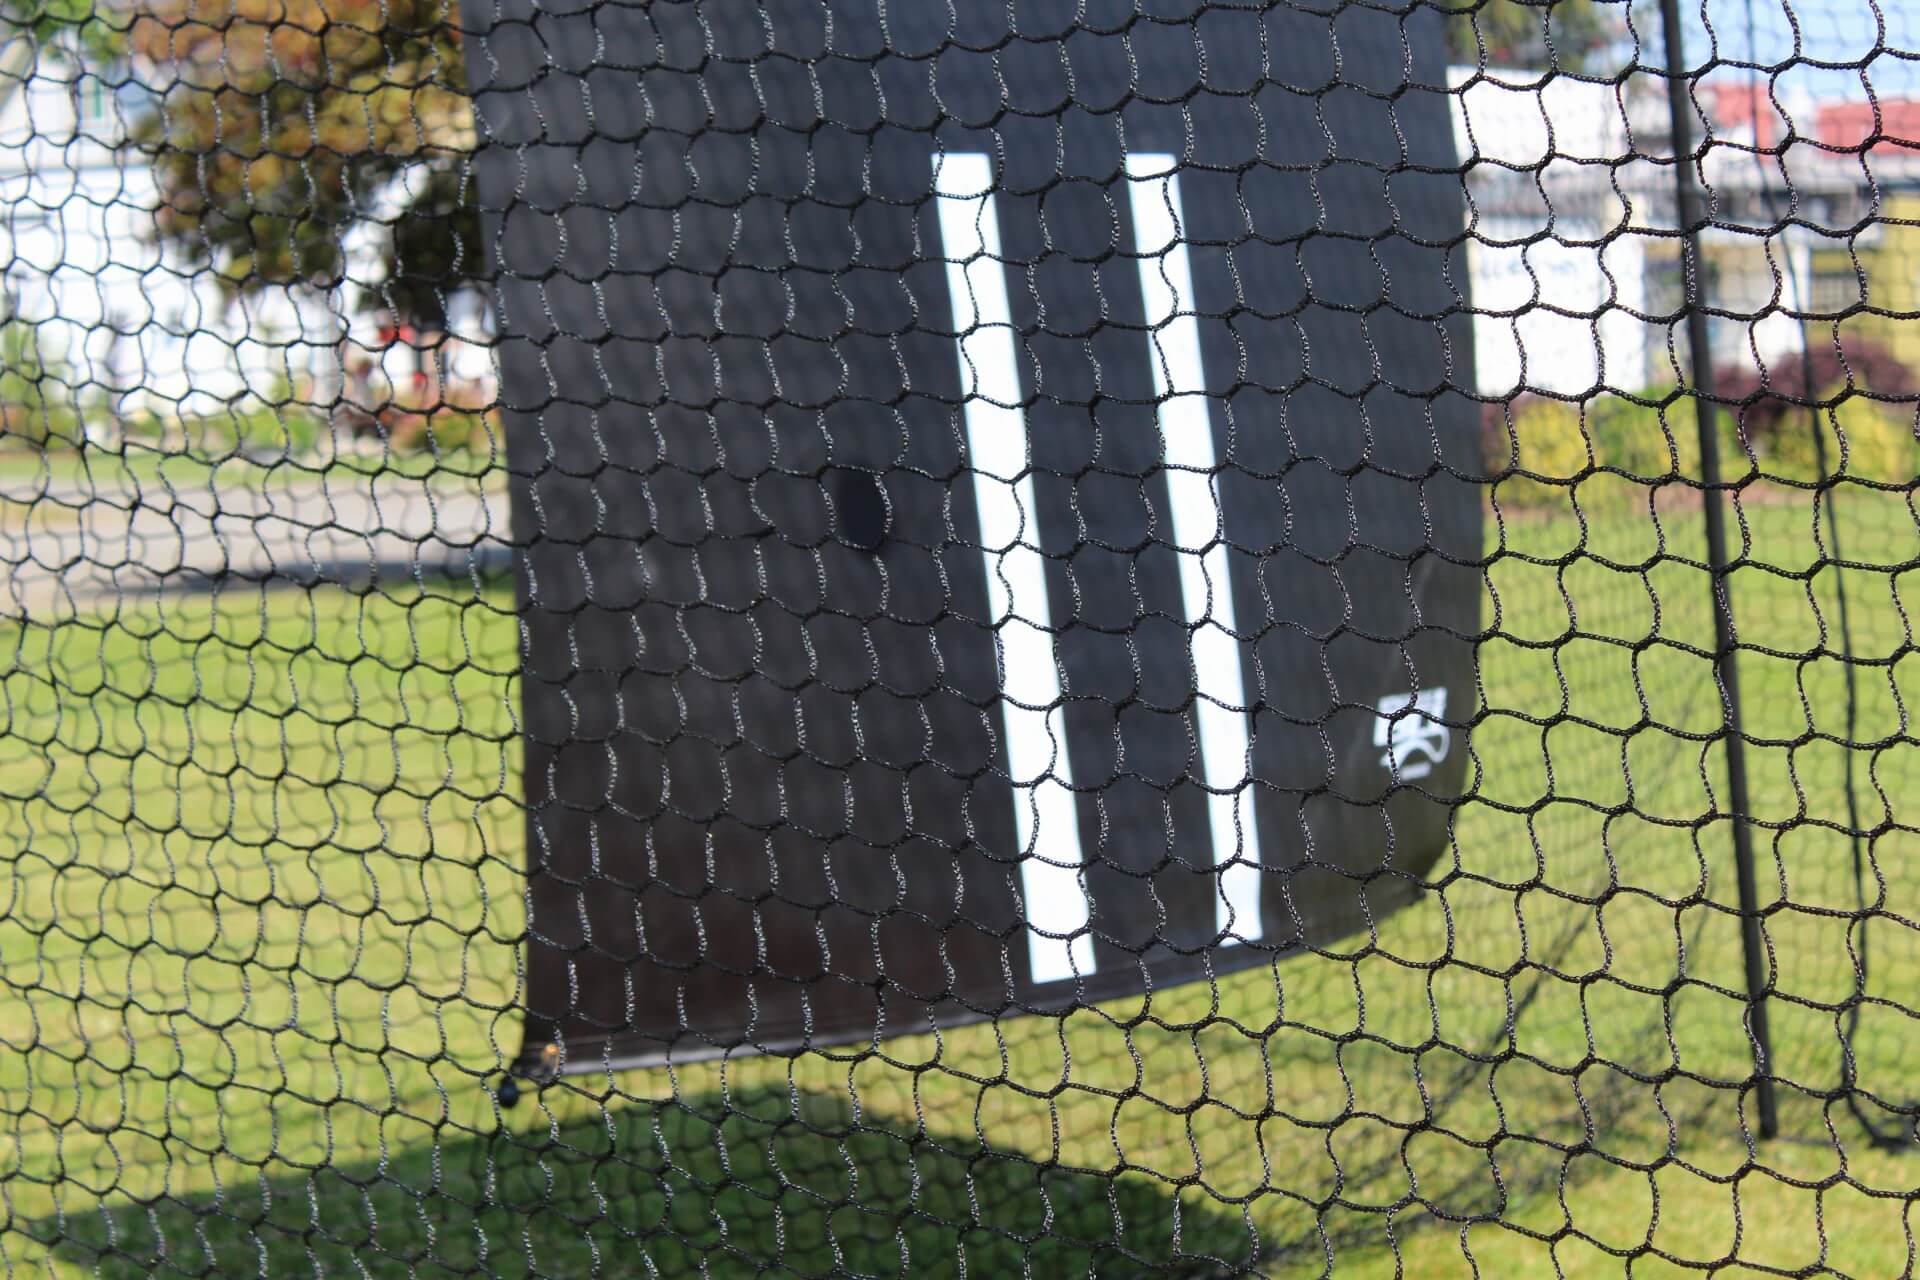 Vinyl backdrop inside the trapezoid batting cage